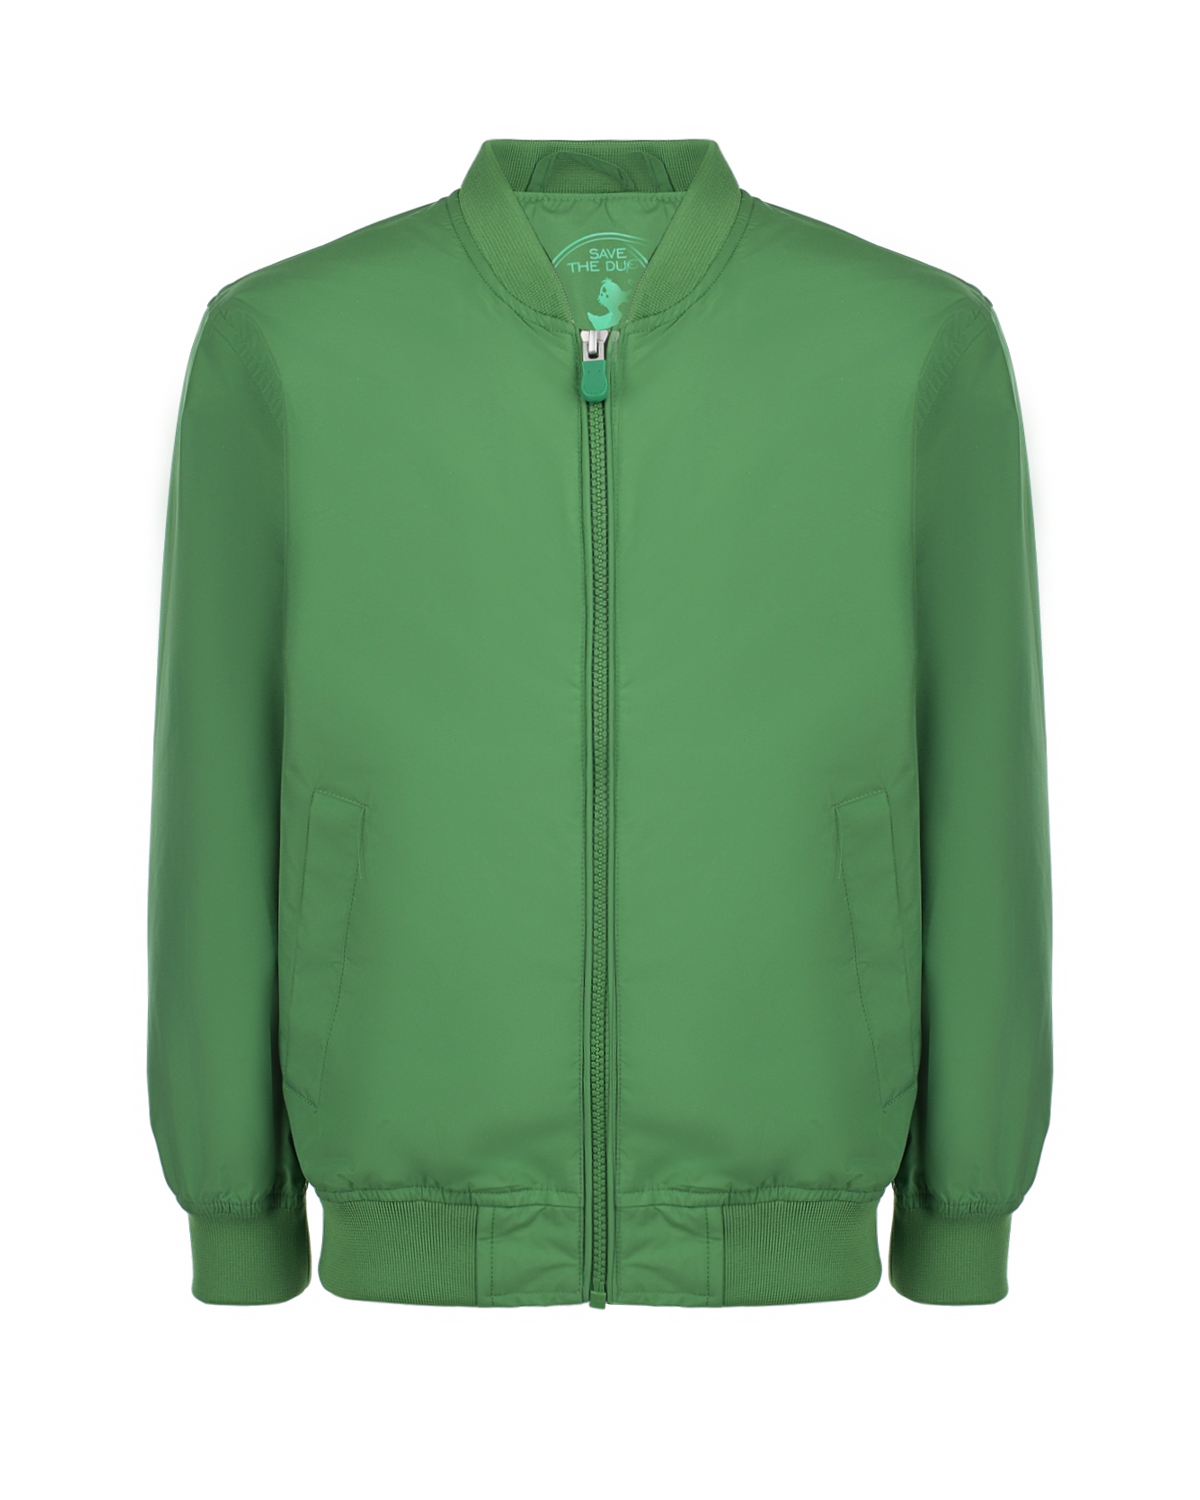 Зеленая куртка-бомбер Save the Duck, размер 164, цвет зеленый - фото 1